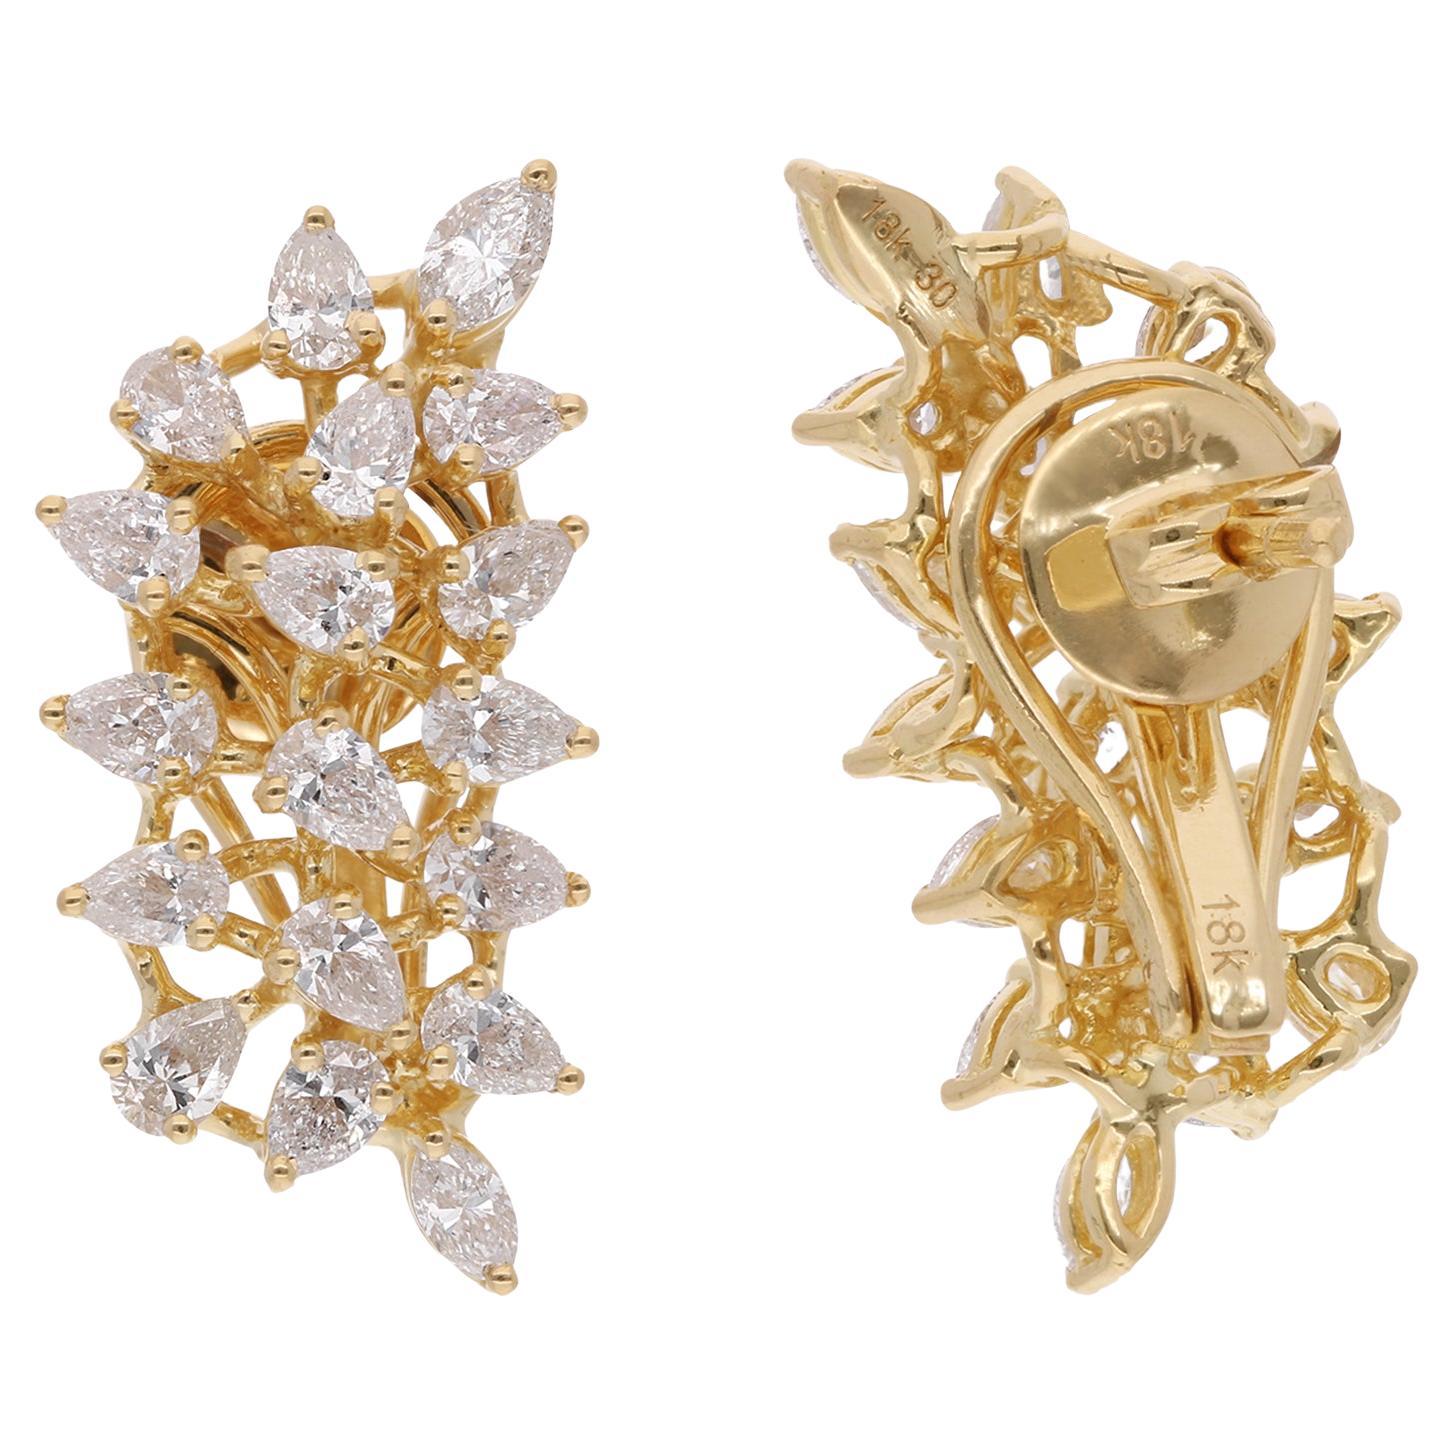 2.9 Carat SI Clarity HI Color Pear Diamond Earrings 18 Karat Yellow Gold Jewelry